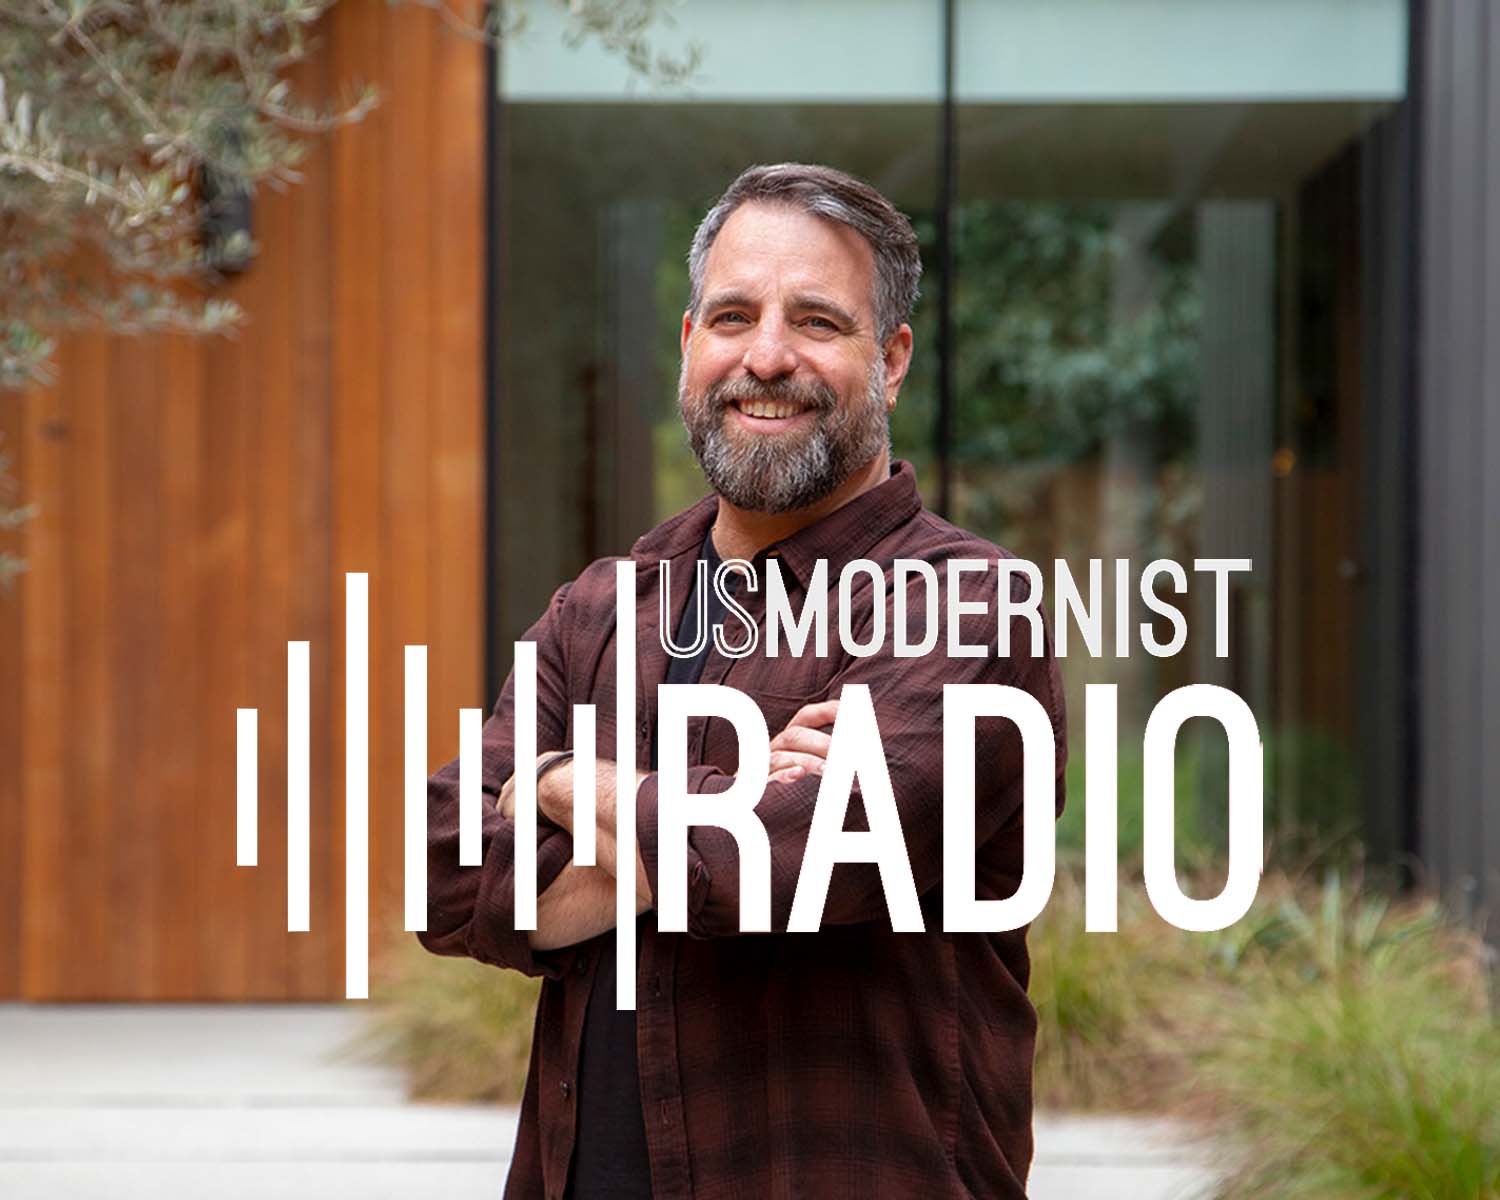 David Thompson, assembledge, architect, podcast, california modern home